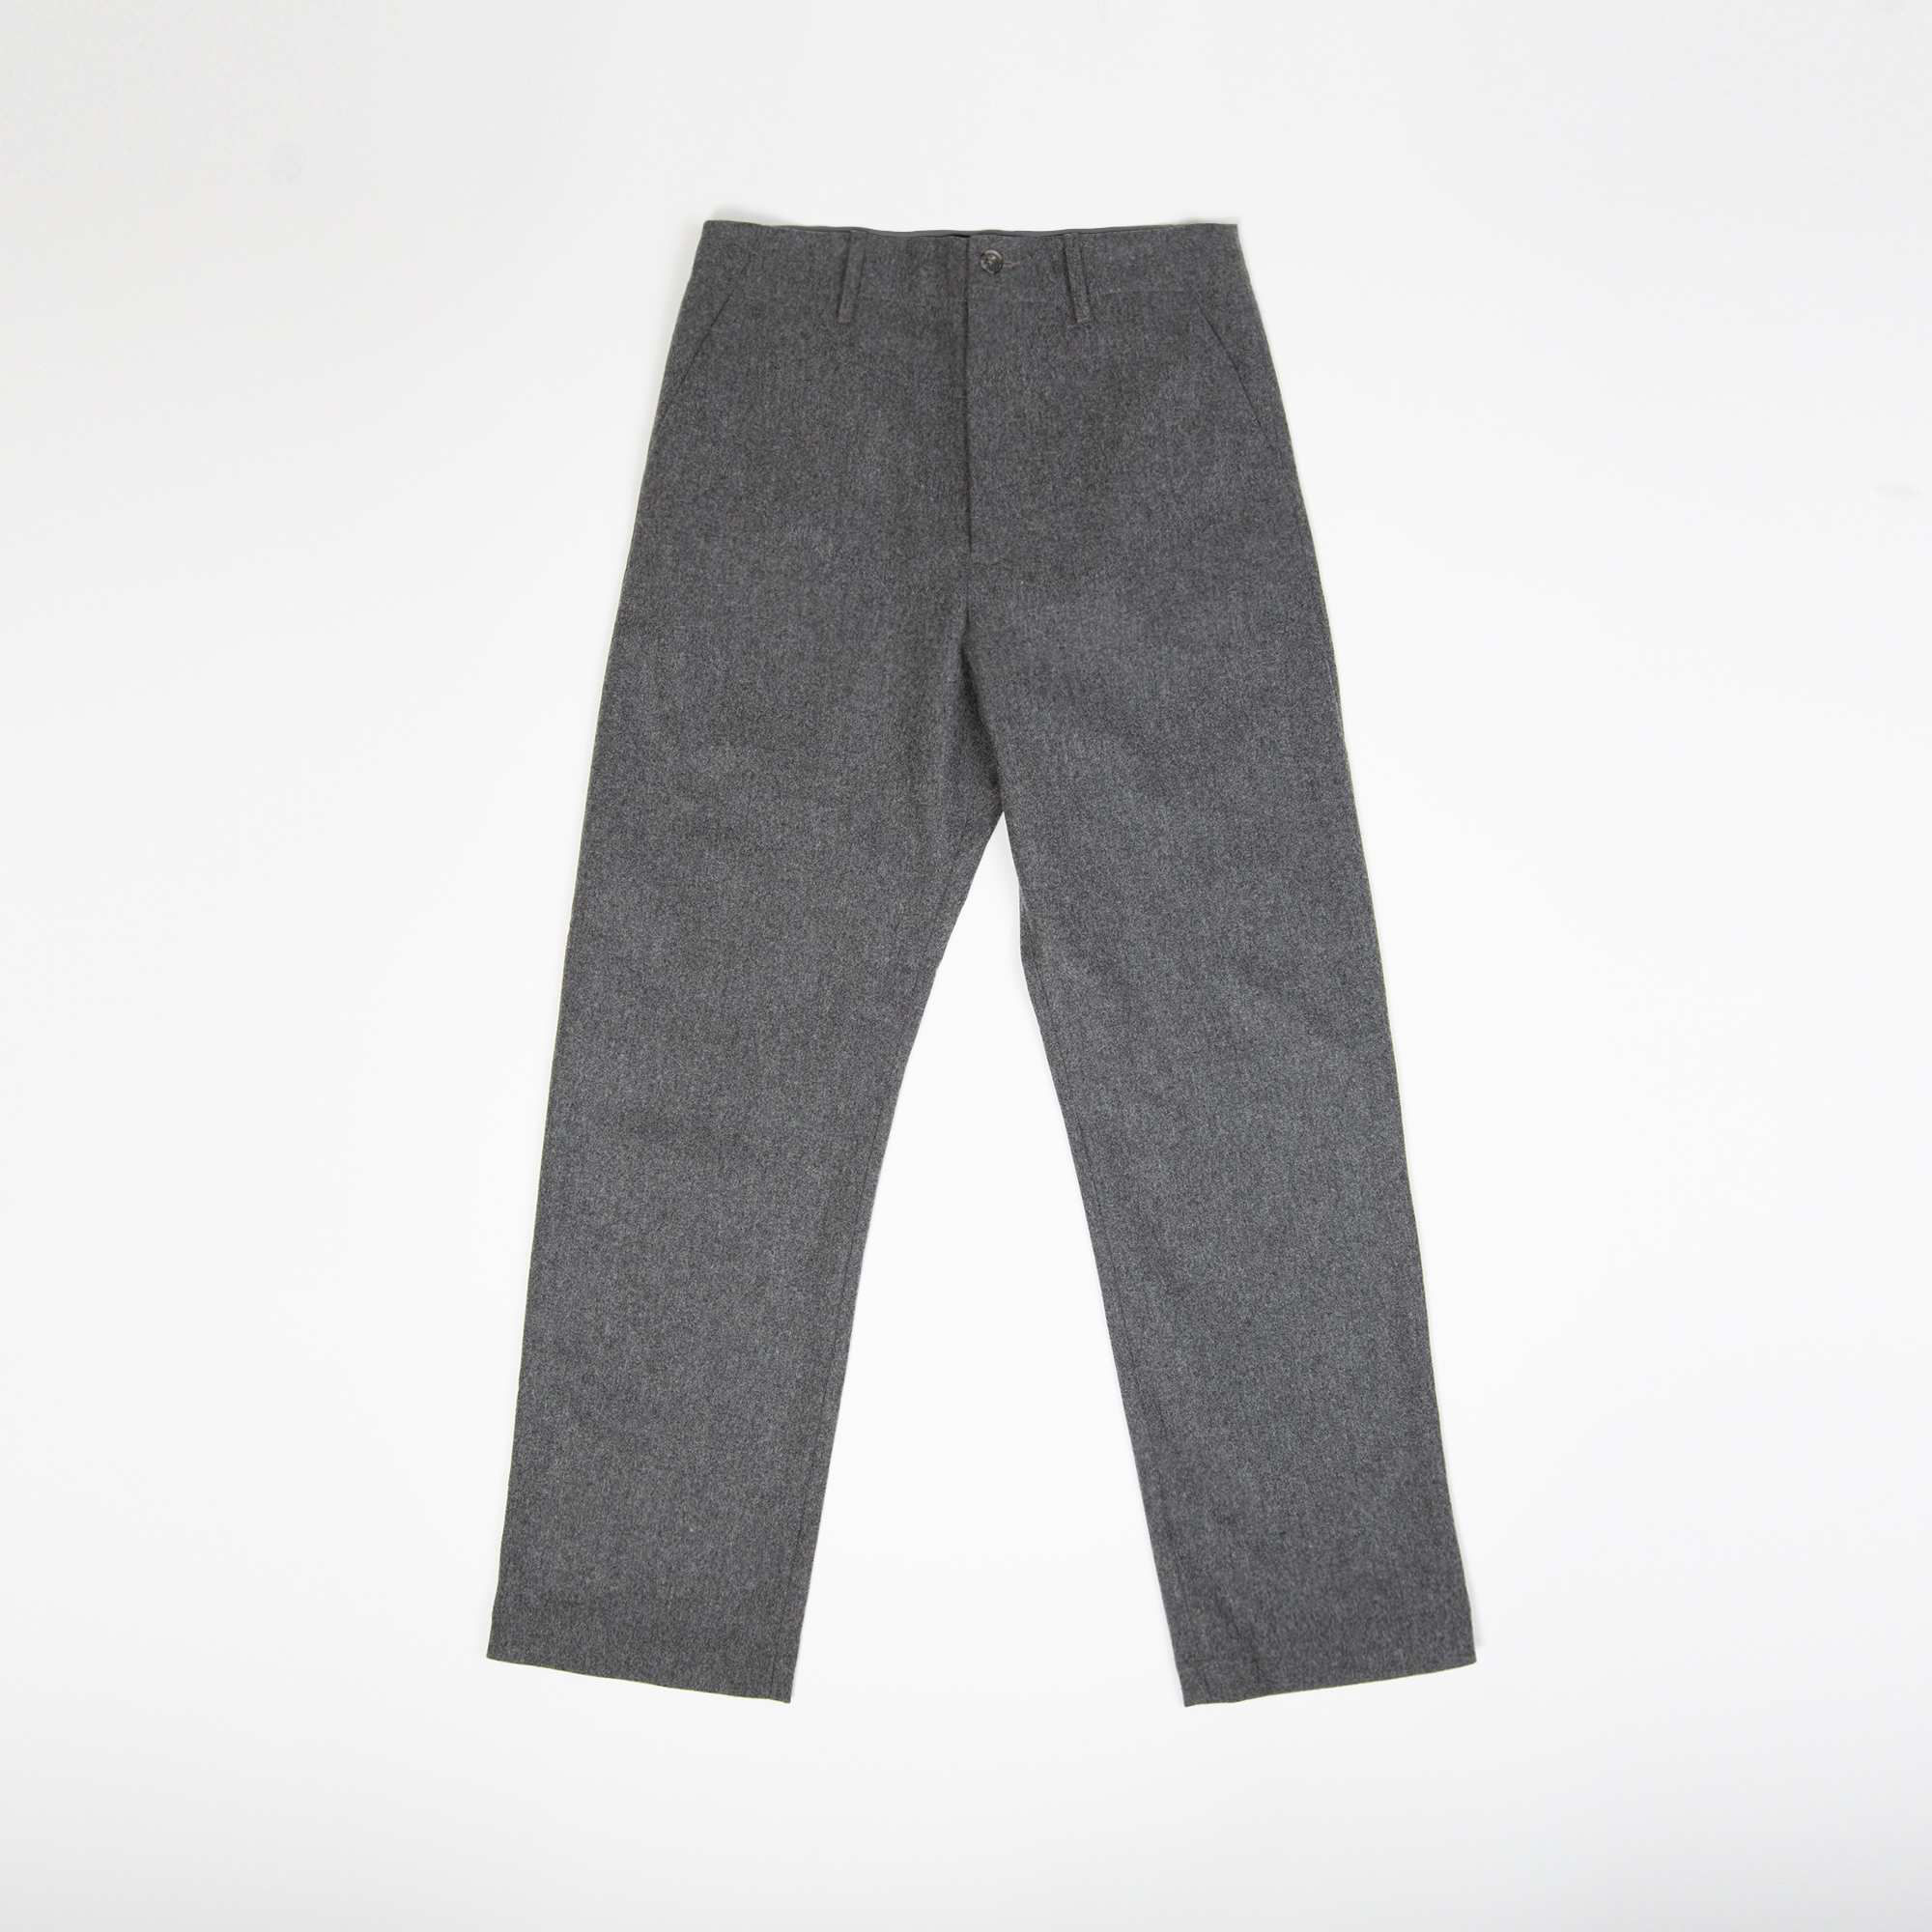 FOX Pants in Grey mix color by Arpenteur